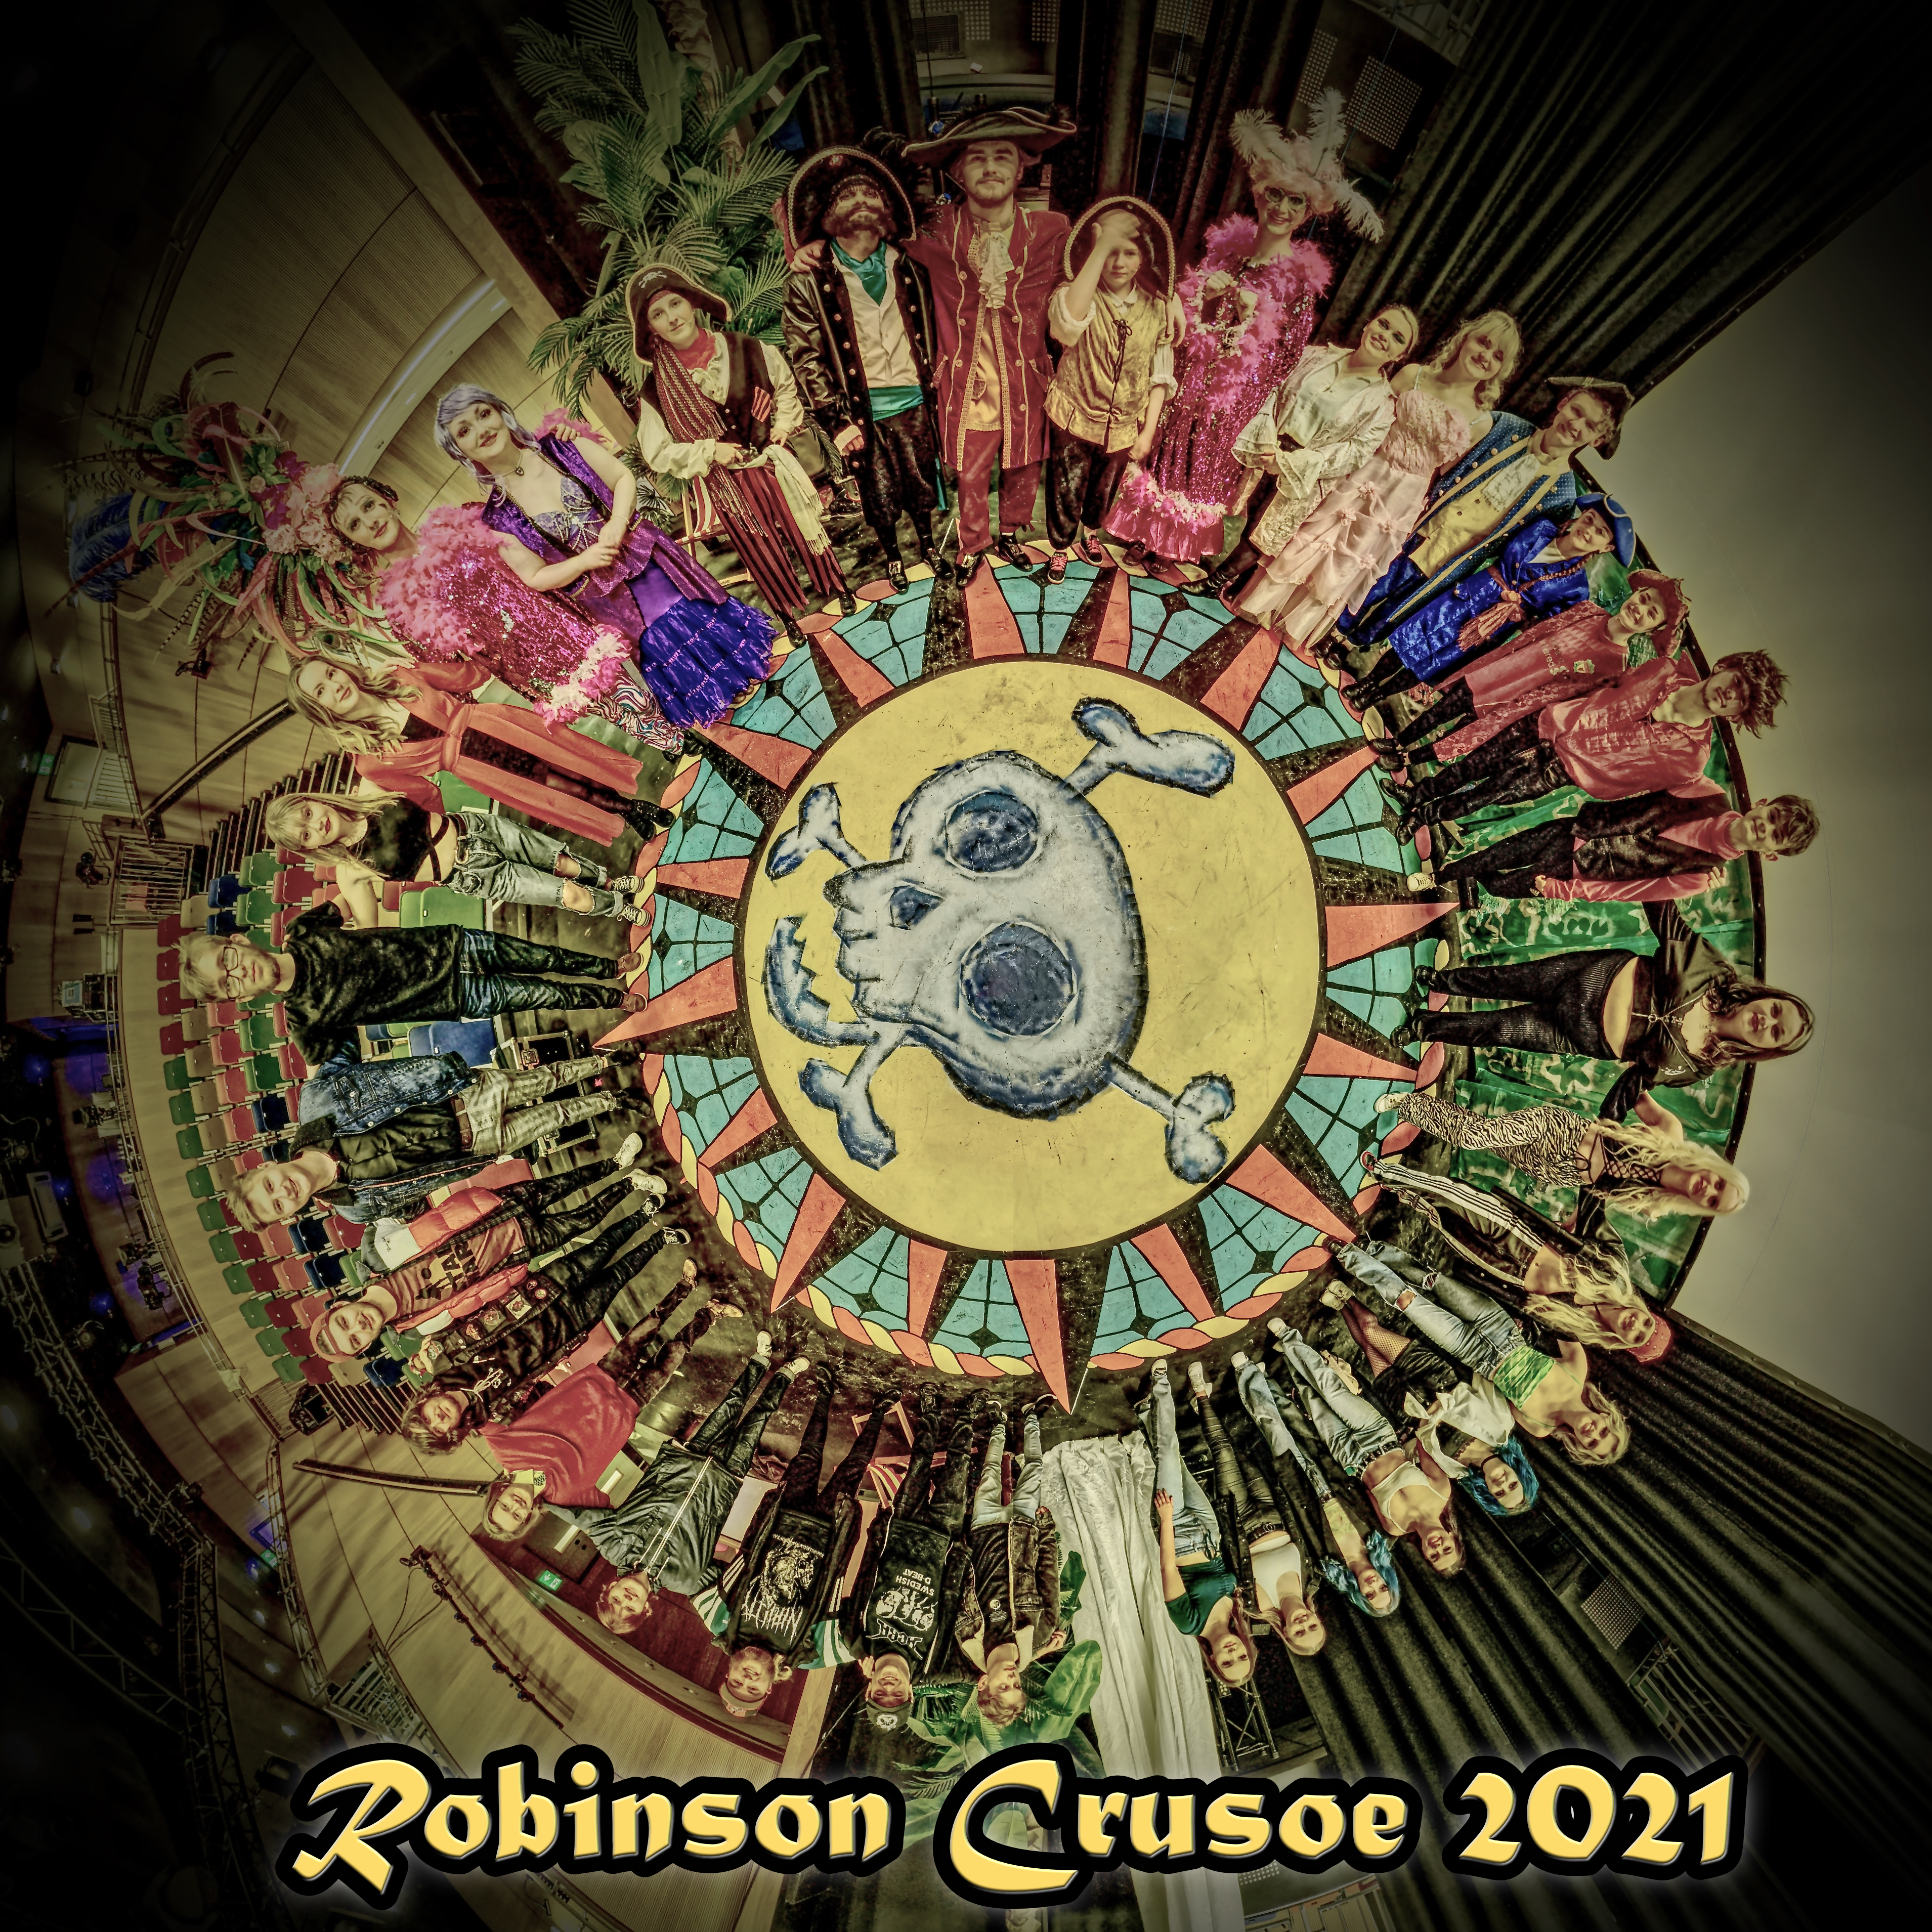 Robinsoe Crusoe3 2021